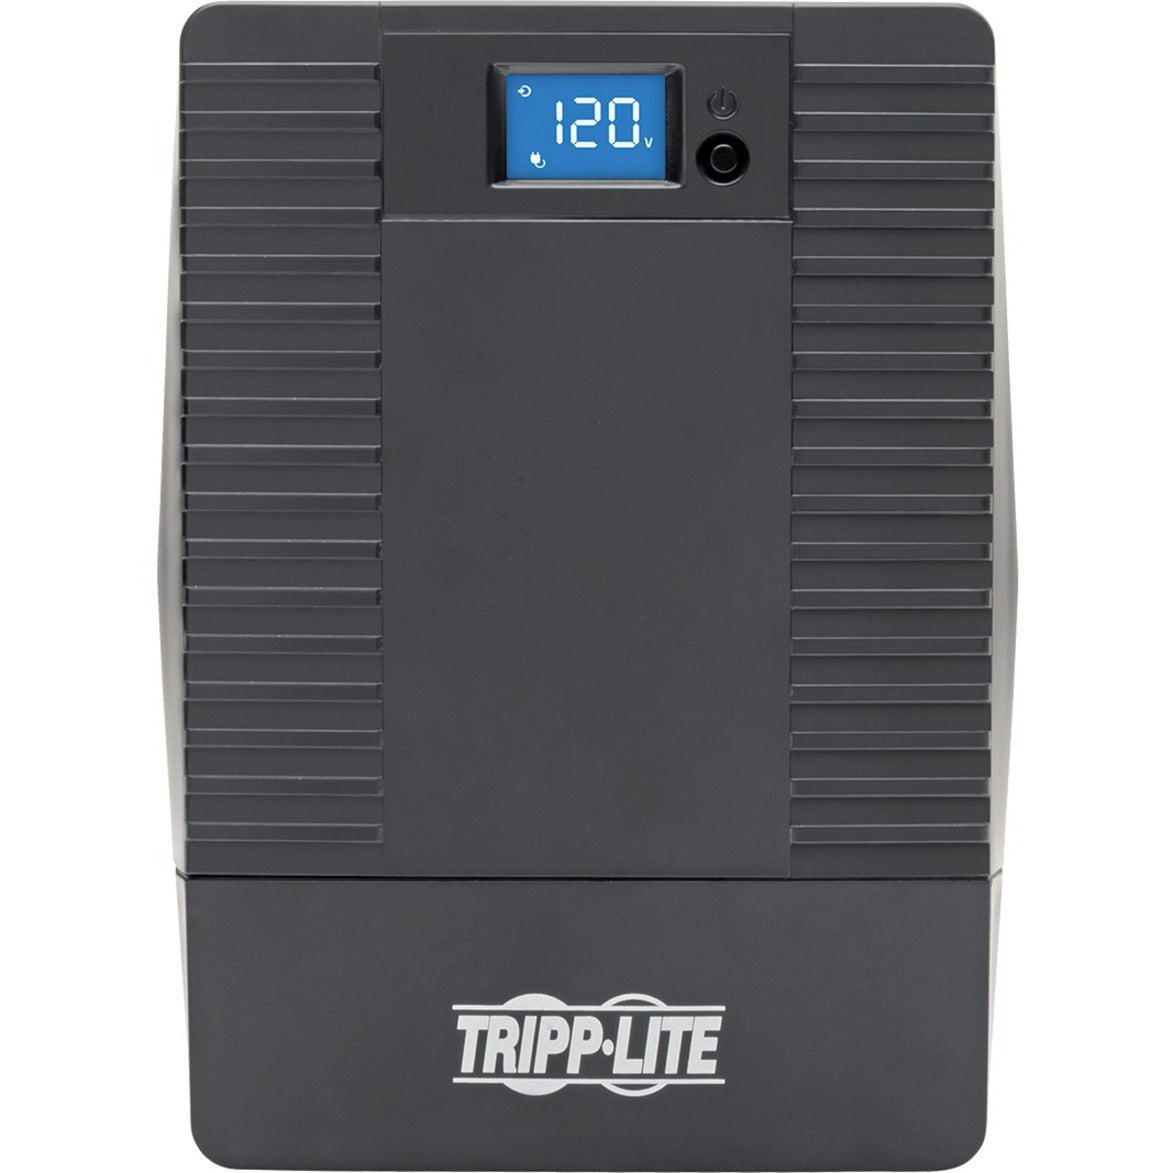 Tripp Lite OMNIVS1500XLCD 1440VA Tower UPS, 3 Year Warranty, AVR, LCD Display